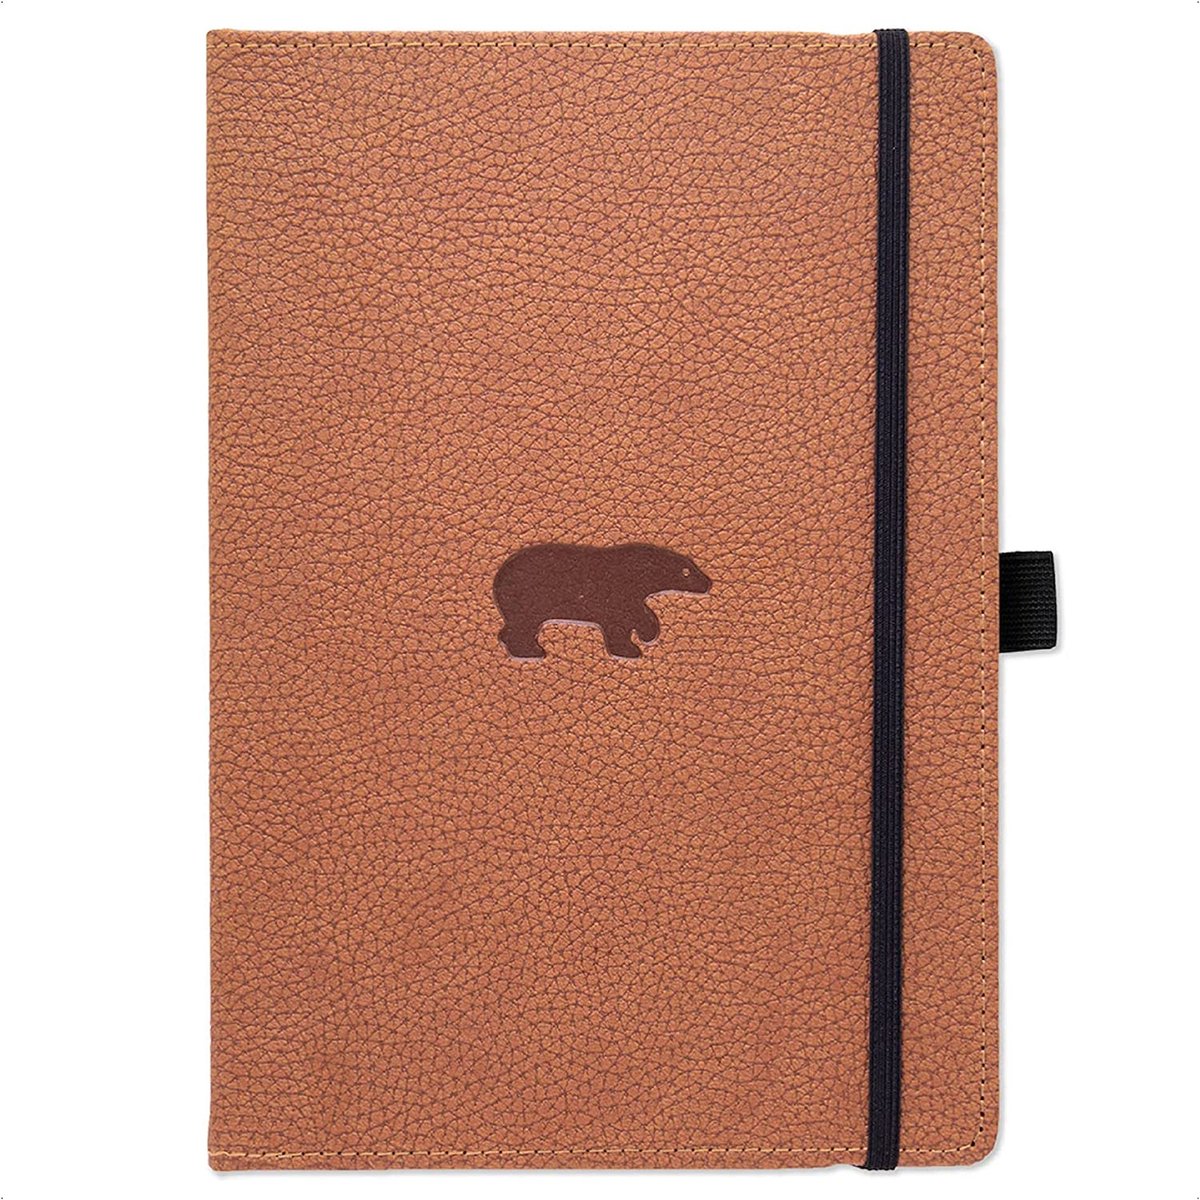 Wildlife- Dingbats* Wildlife A4+ Brown Bear Notebook - Graph